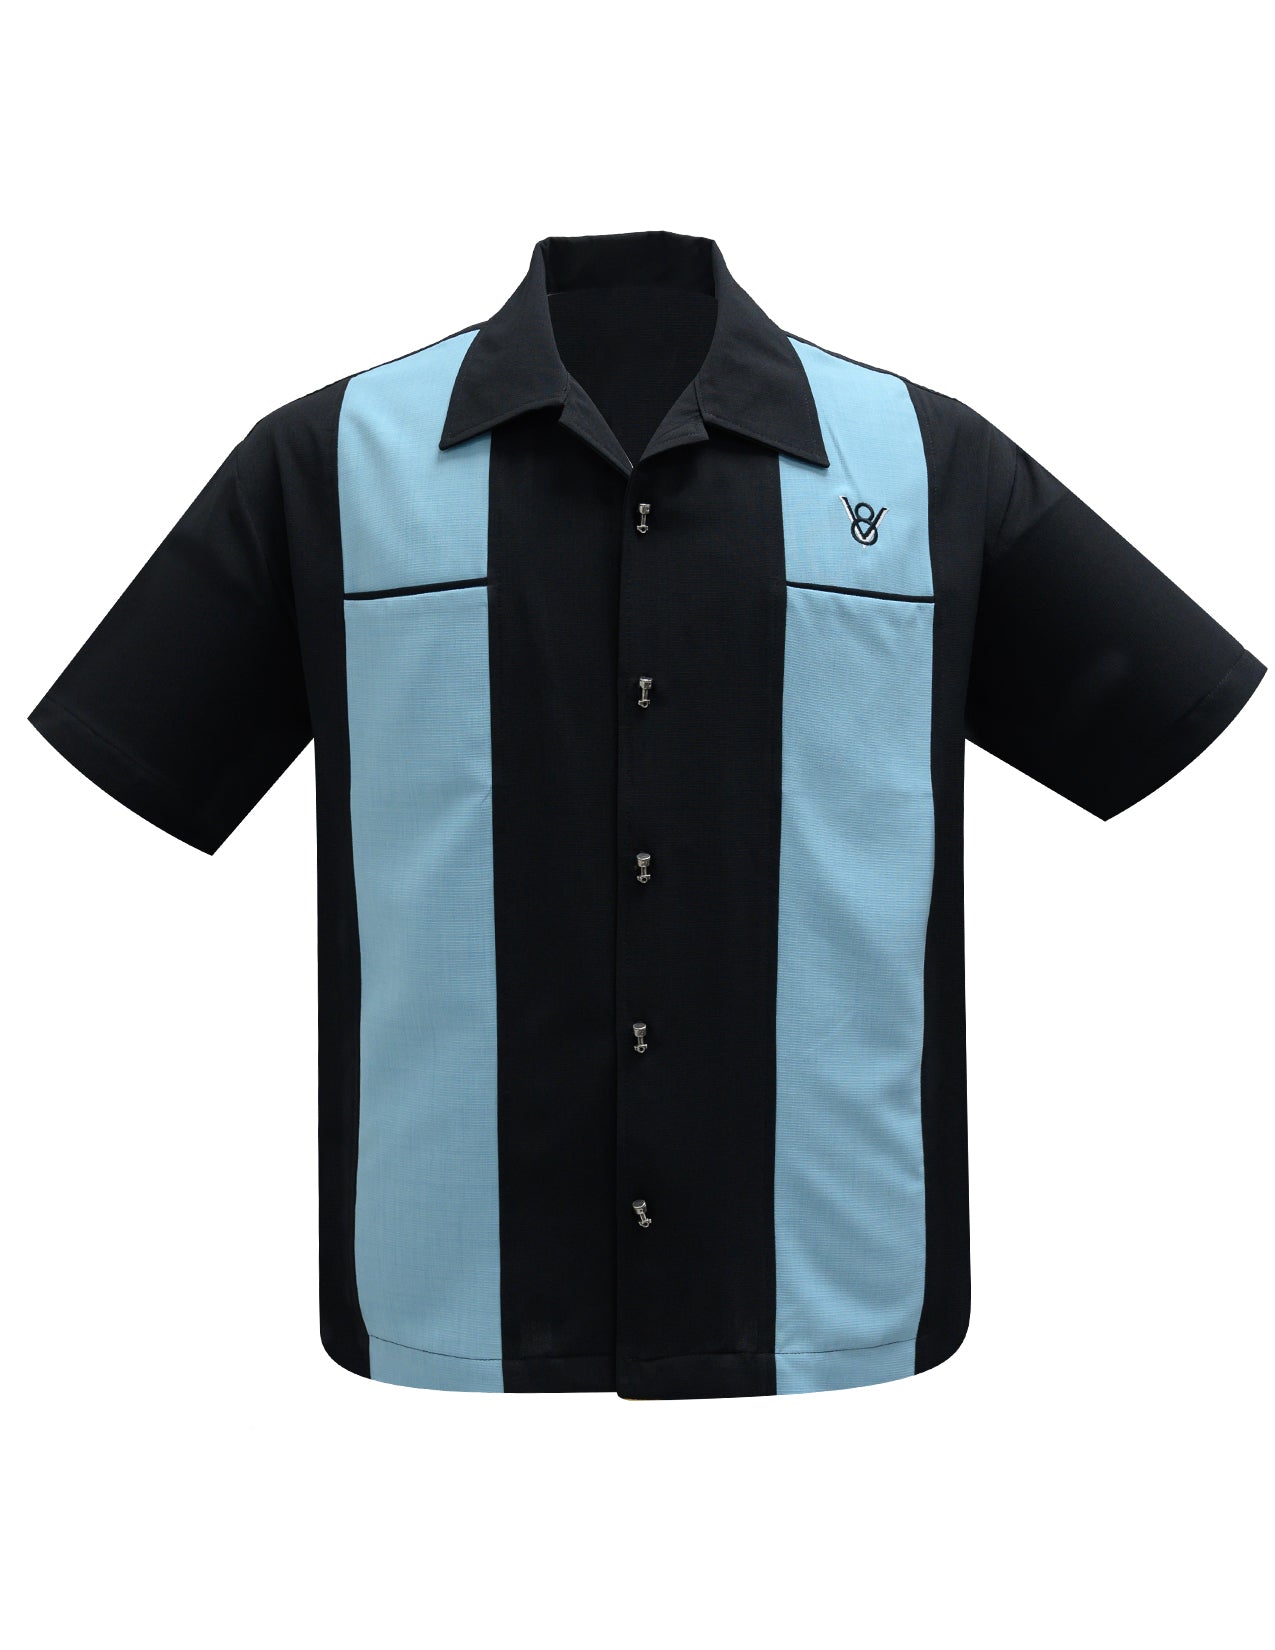 Shop Classy Piston Bowling Shirt in Black/Aqua Online | Steady Clothing